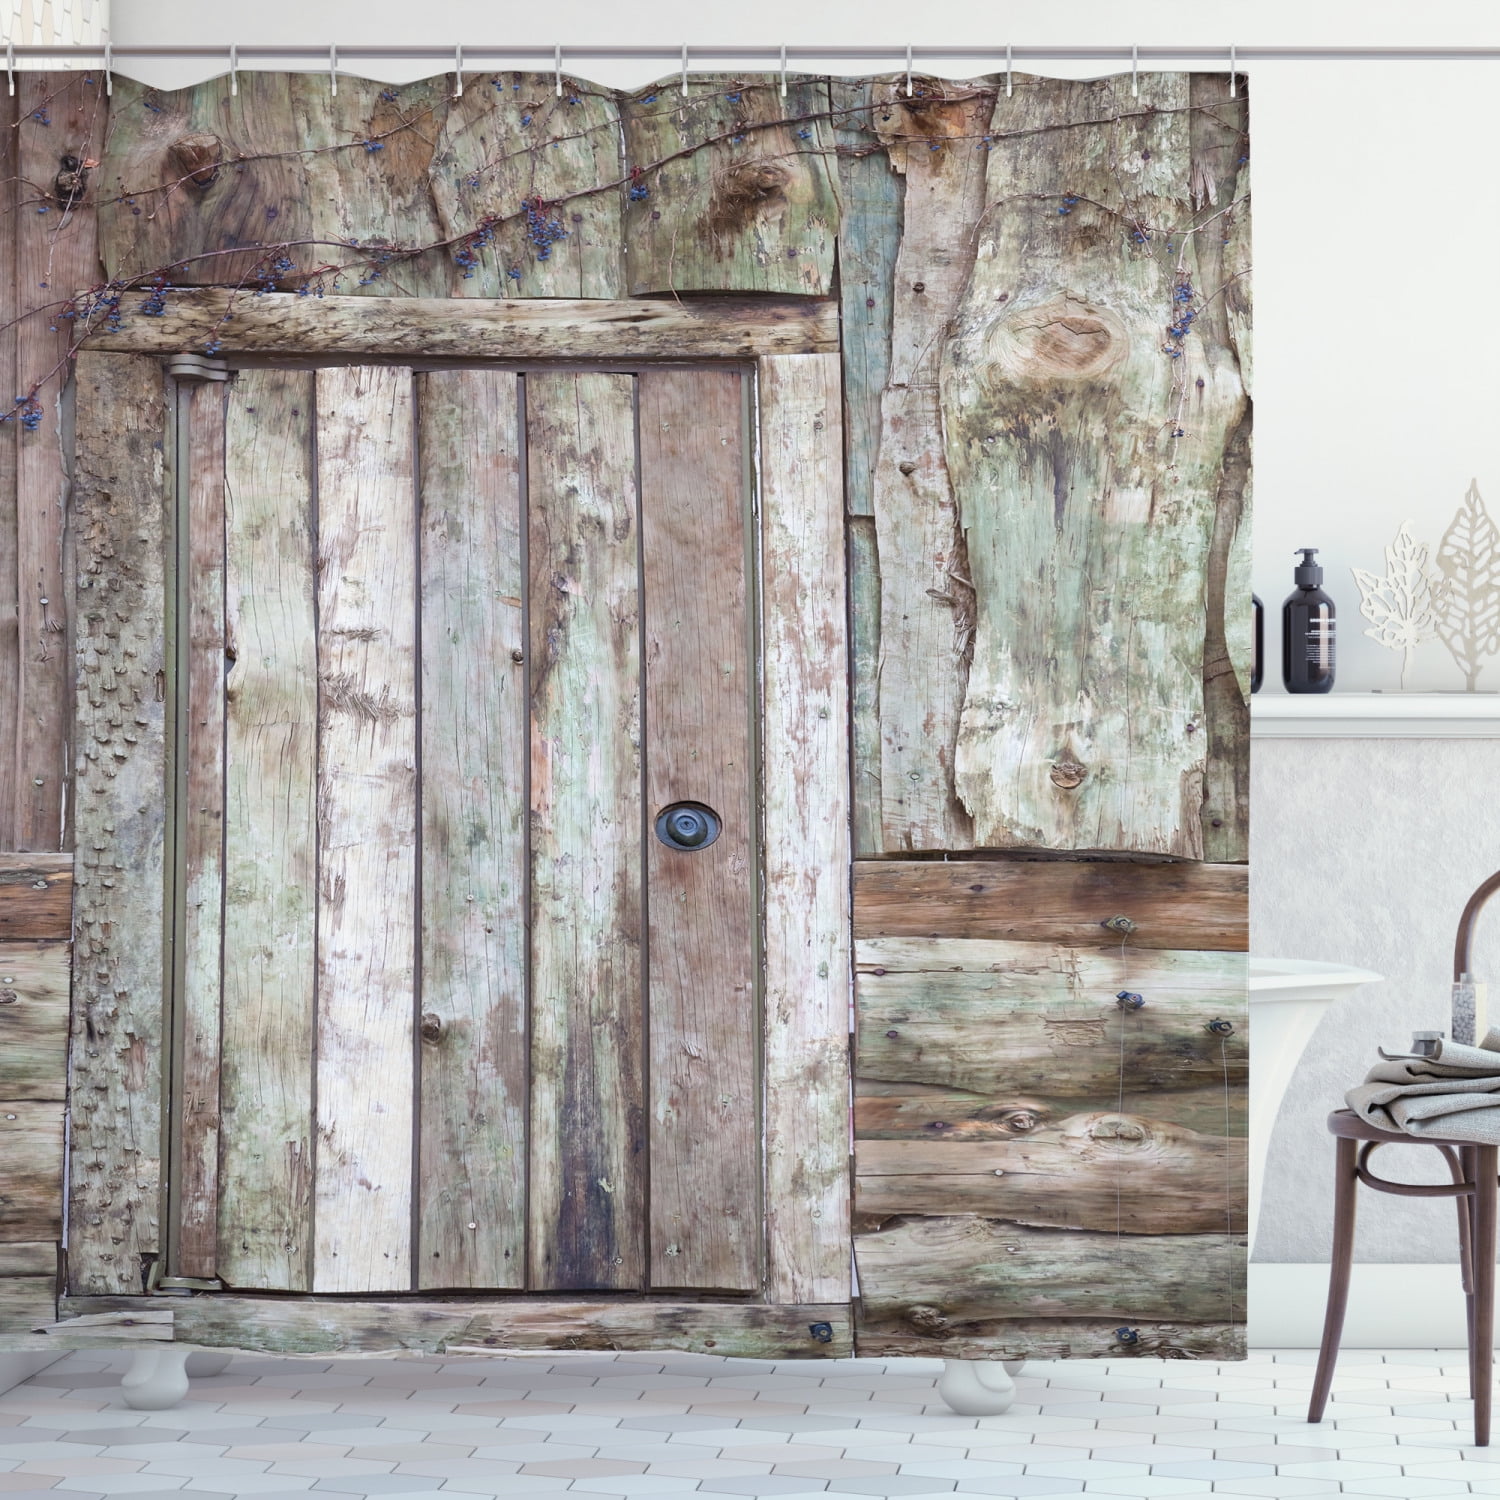 Rustic Farm Barn Metal Iron Door Shower Curtain Bathroom Decor Fabric & 12hooks 